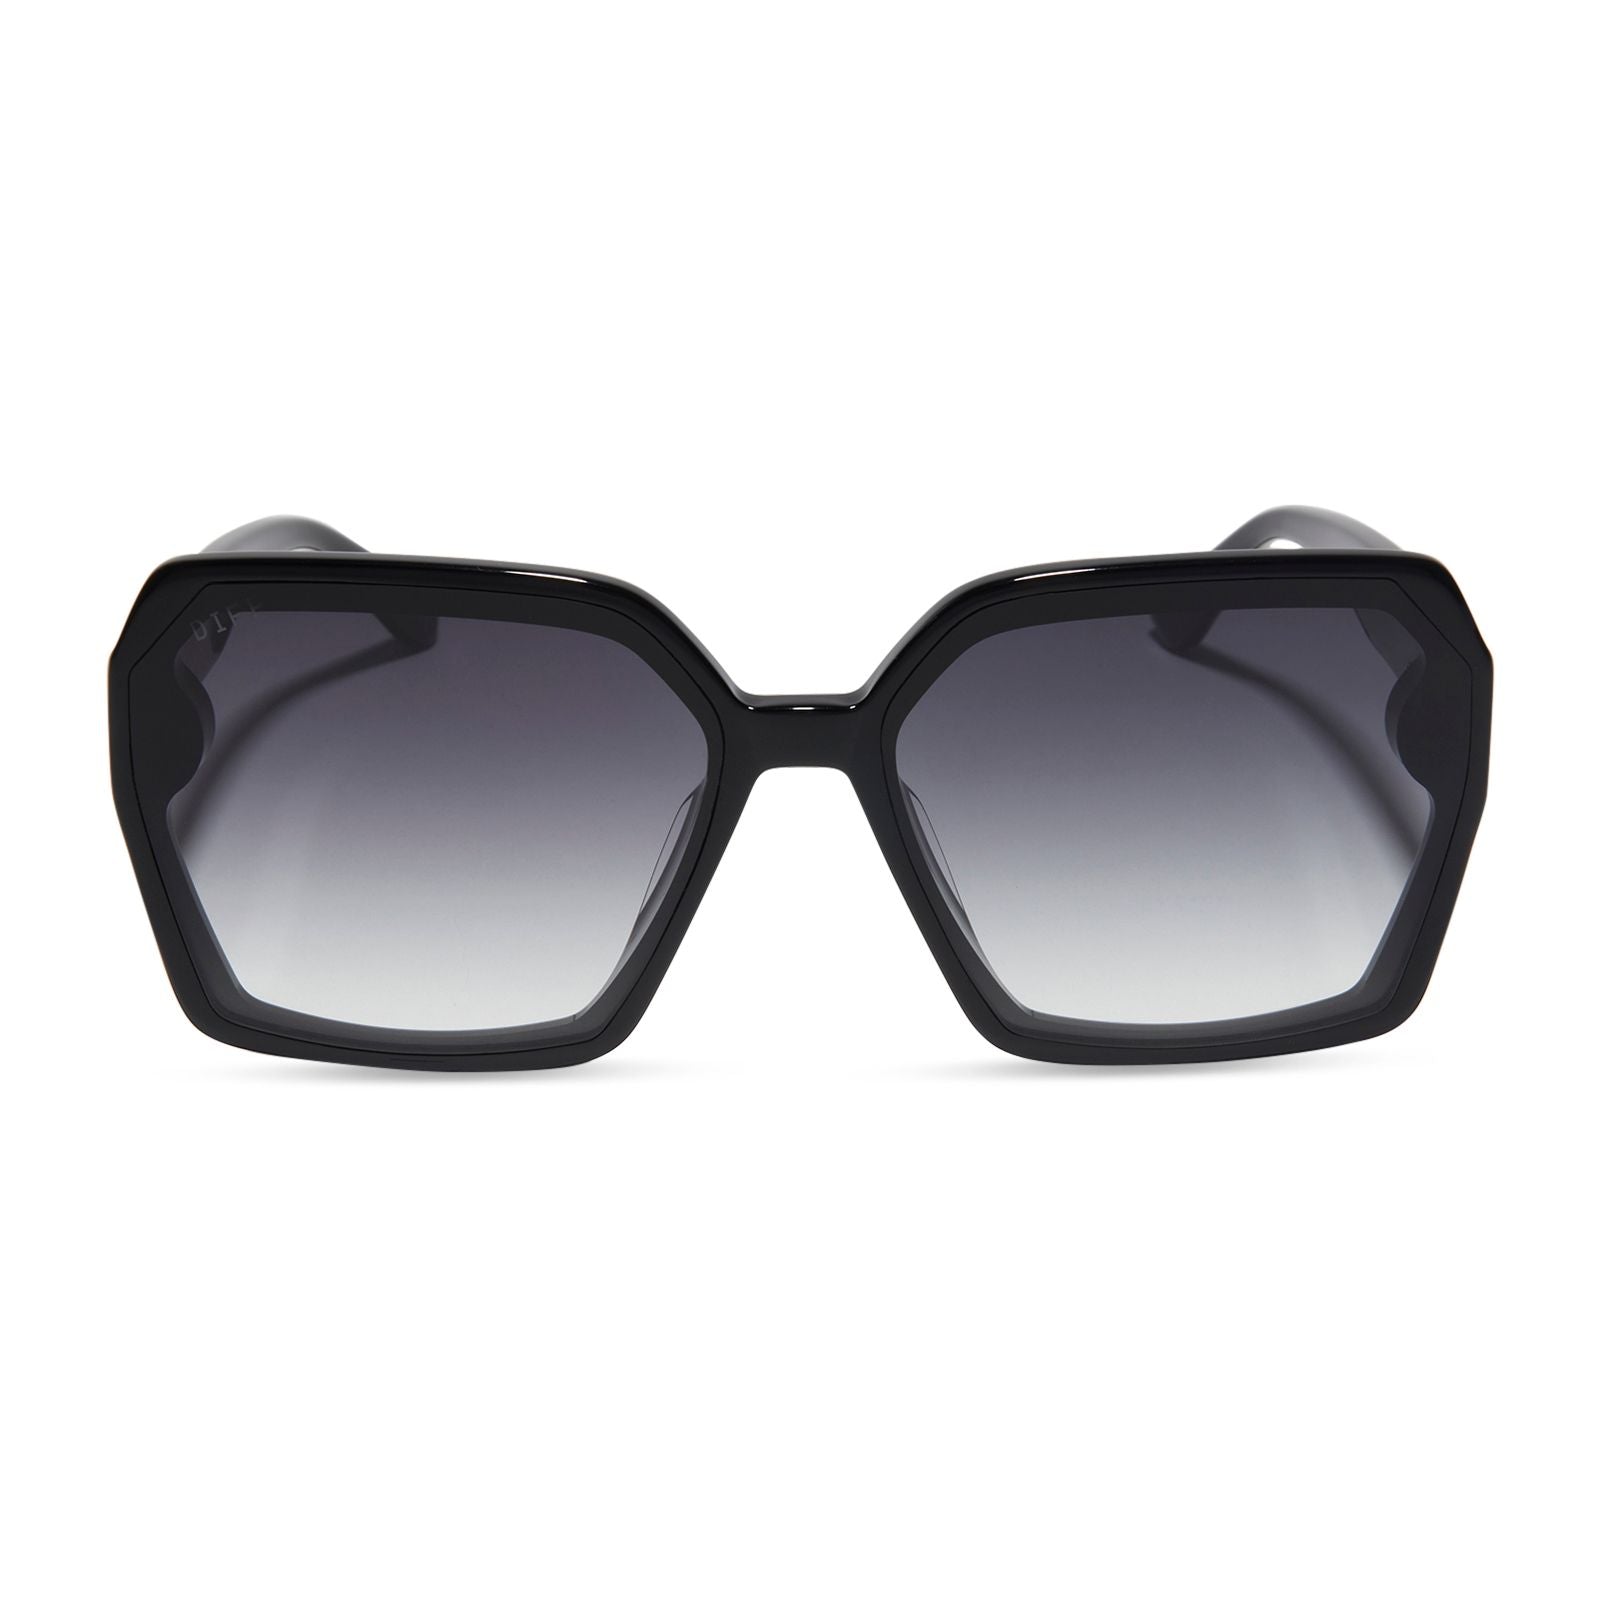 Presley Square Black Grey Gradient Sunglasses - Brazos Avenue Market 